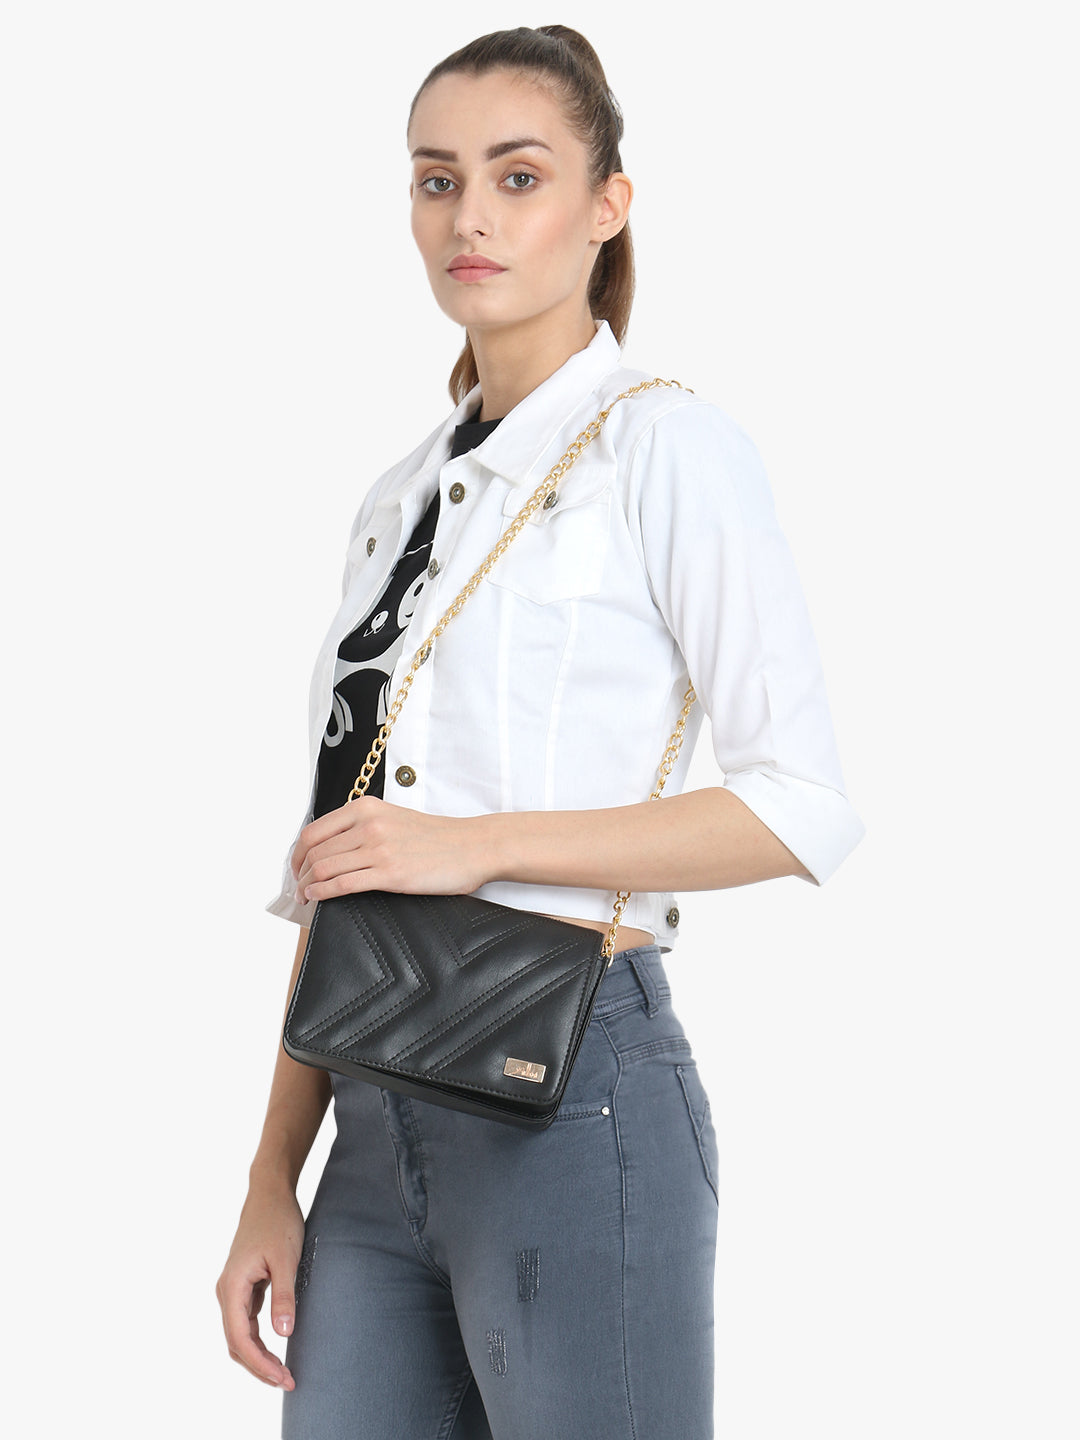 Trendy Black Quilted Sling Bag